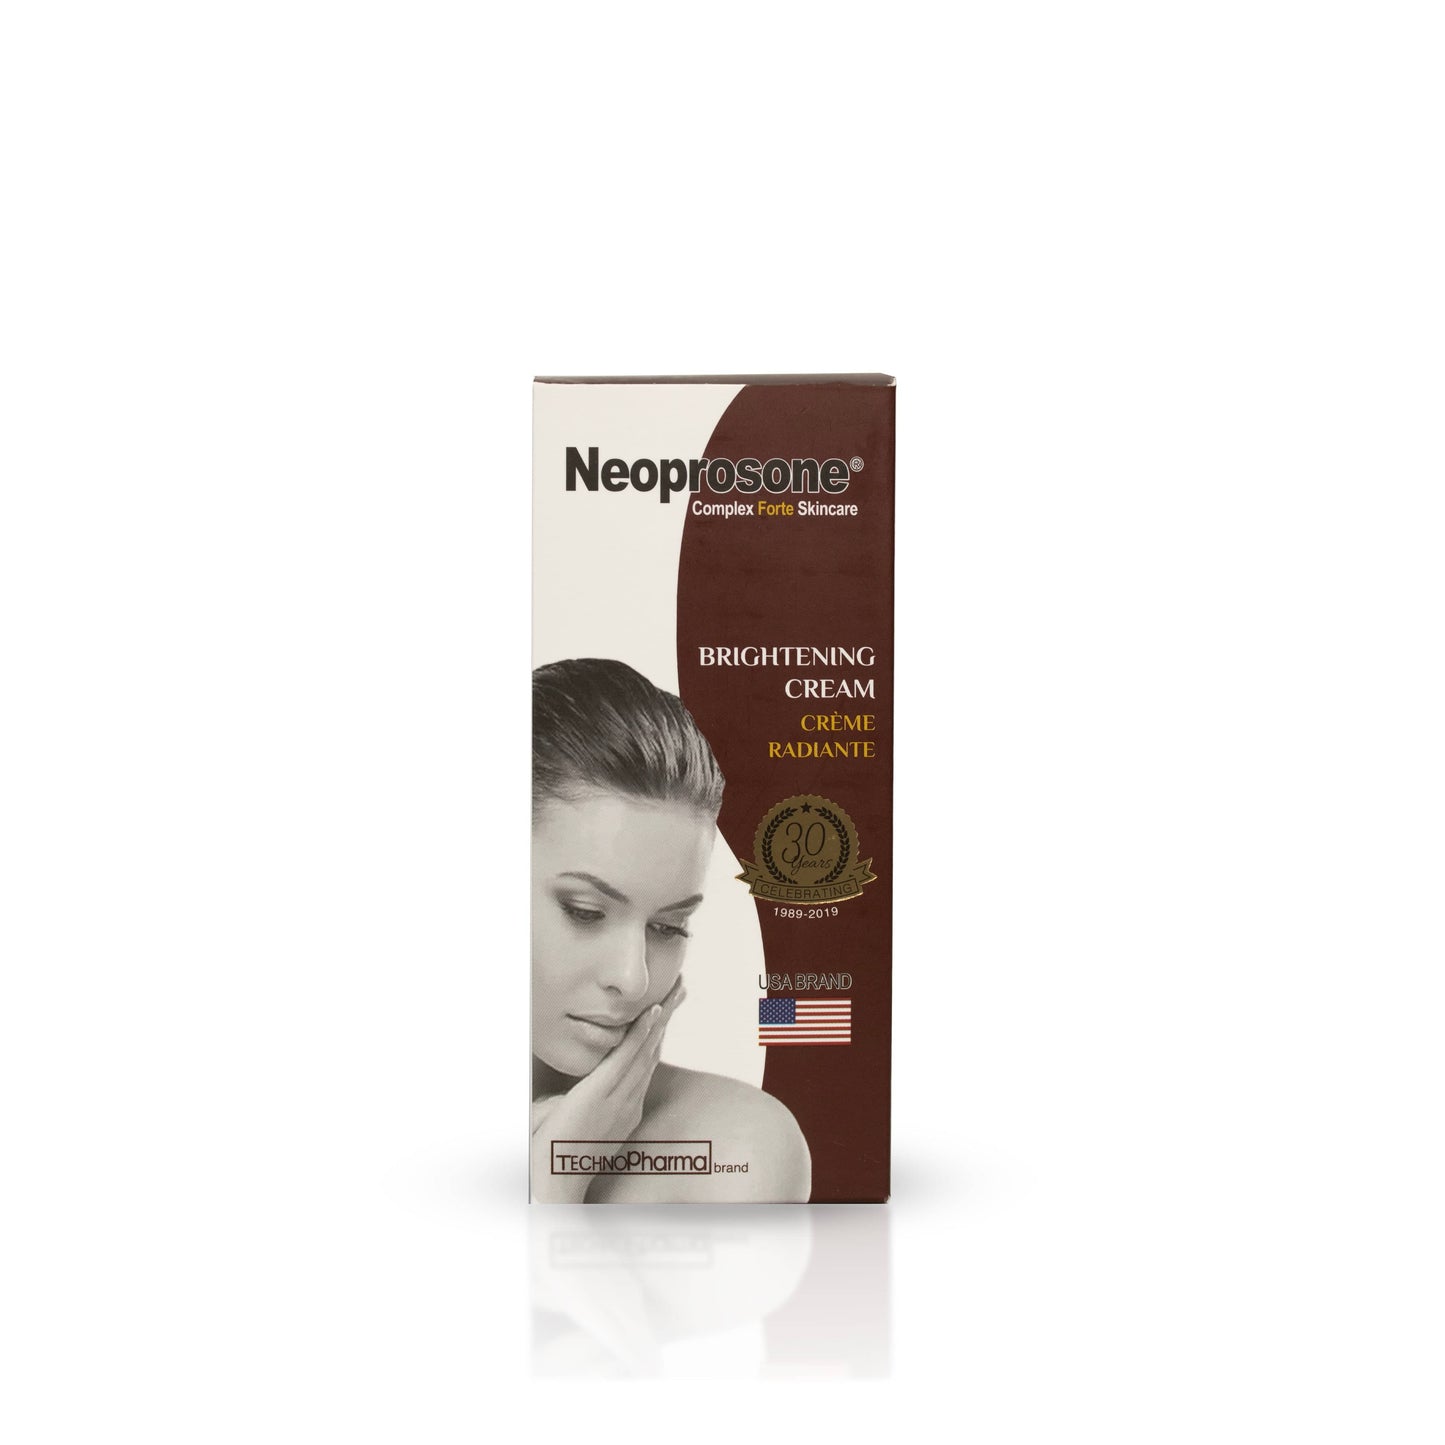 Productos Neoprosone Crema Iluminadora 2 fl oz / 60 Gr